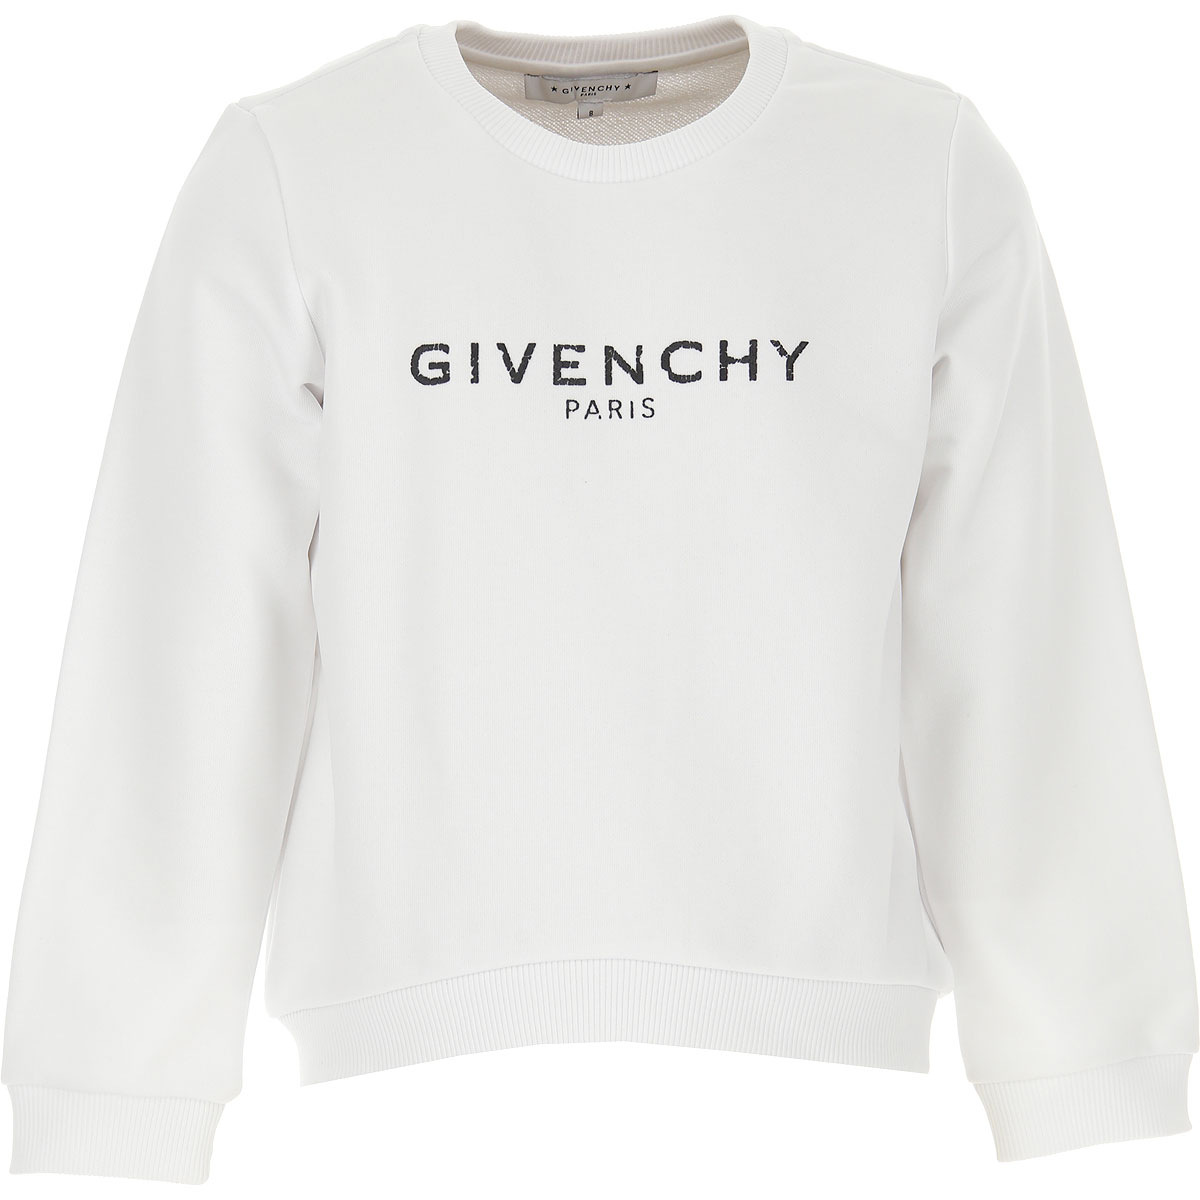 Kidswear Givenchy, Style code: h15140-10b-